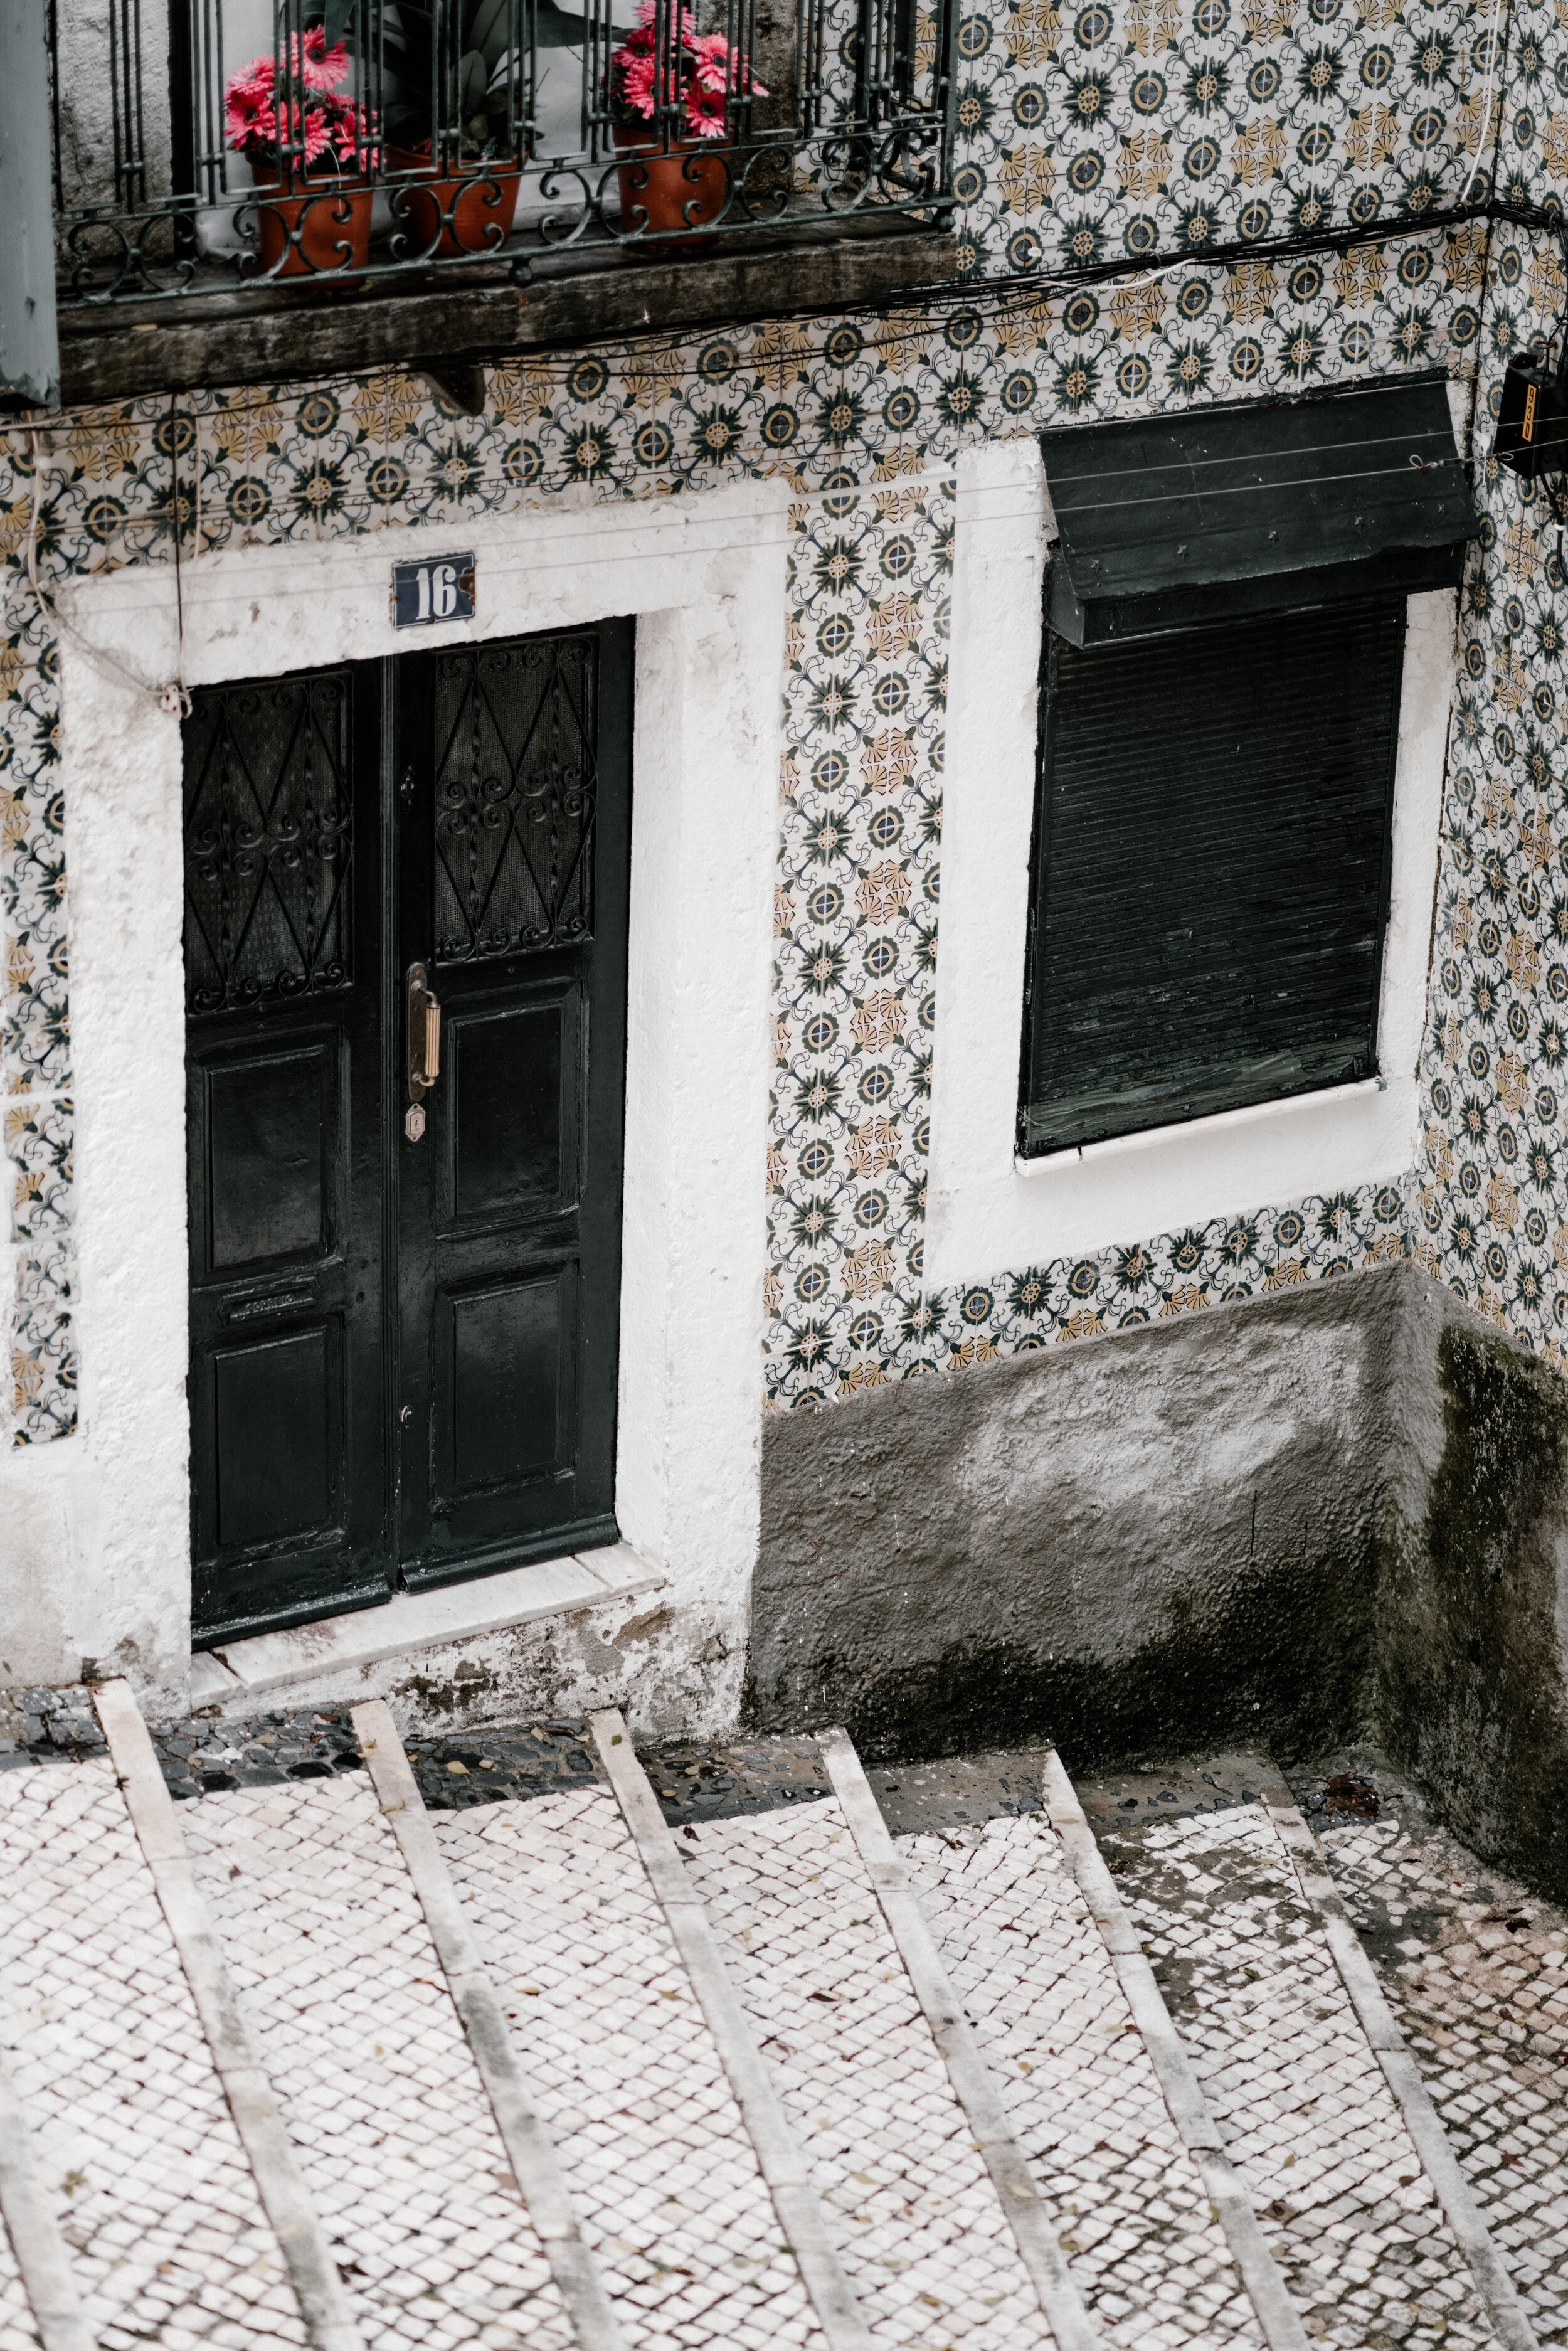 Lisbon tiles in alleyway annie spratt unsplash.jpg